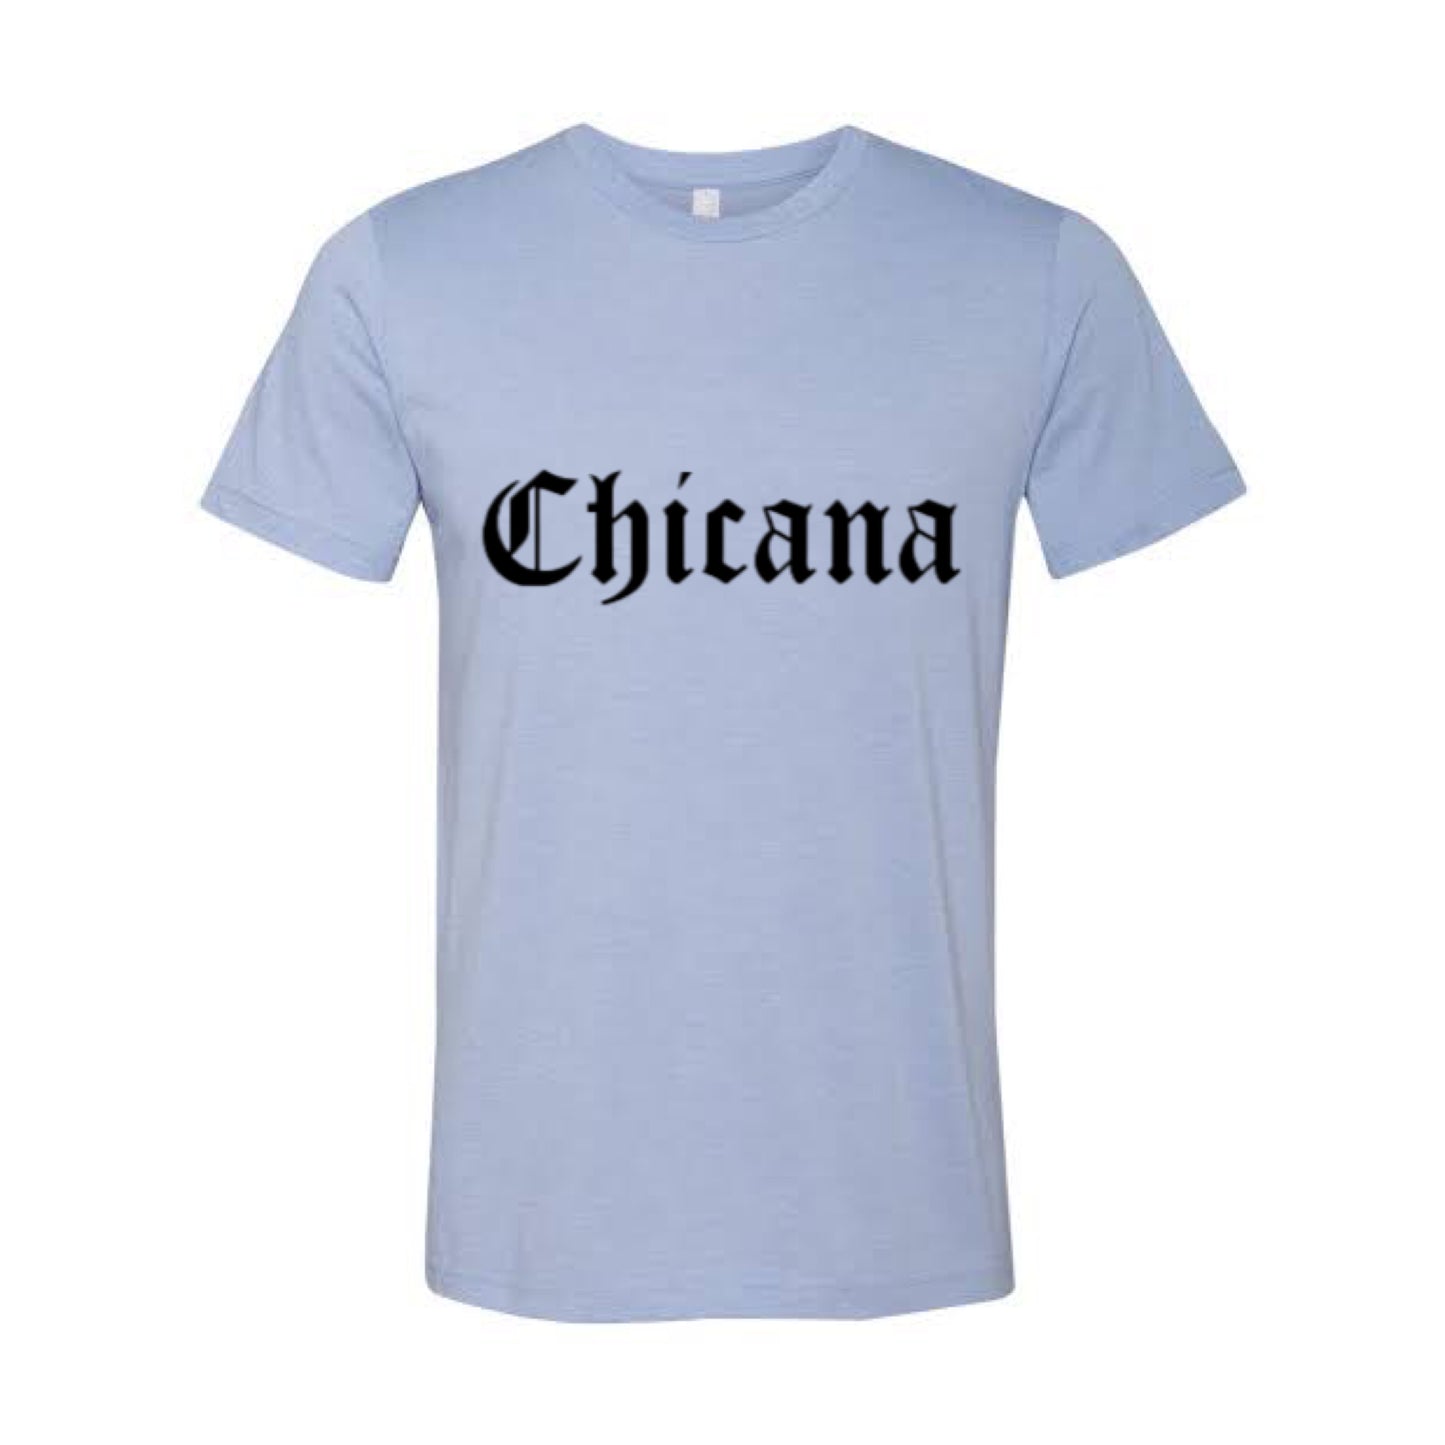 Chicano, Chicana, Chicanx unisex short-sleeve T-shirt